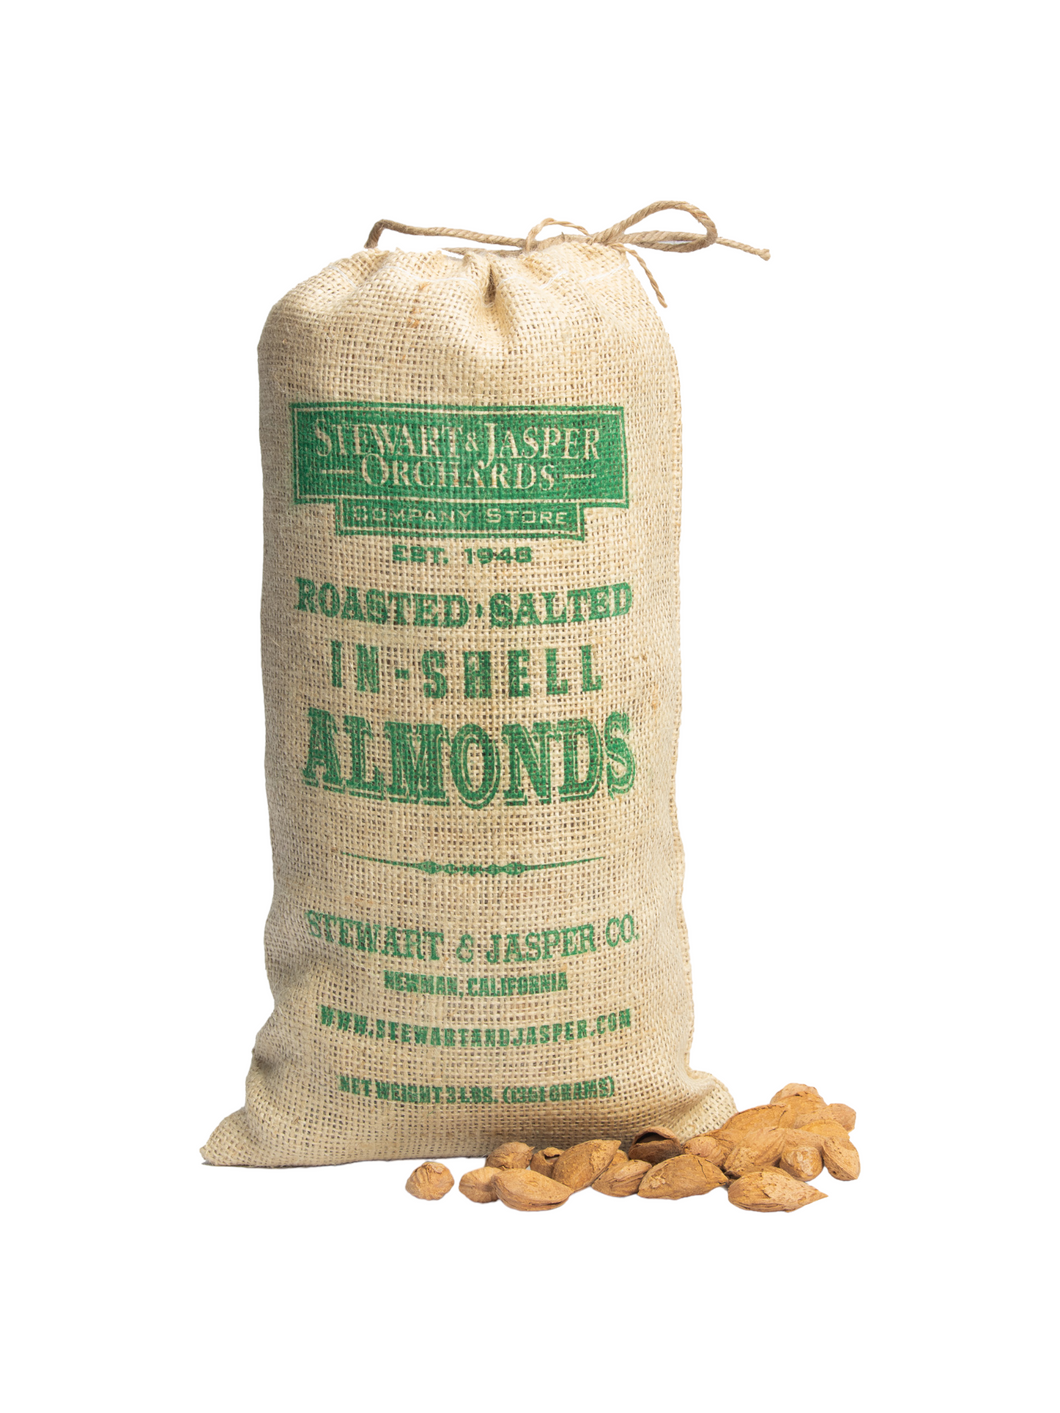 Roasted Salted Inshell Almonds - Burlap Sack